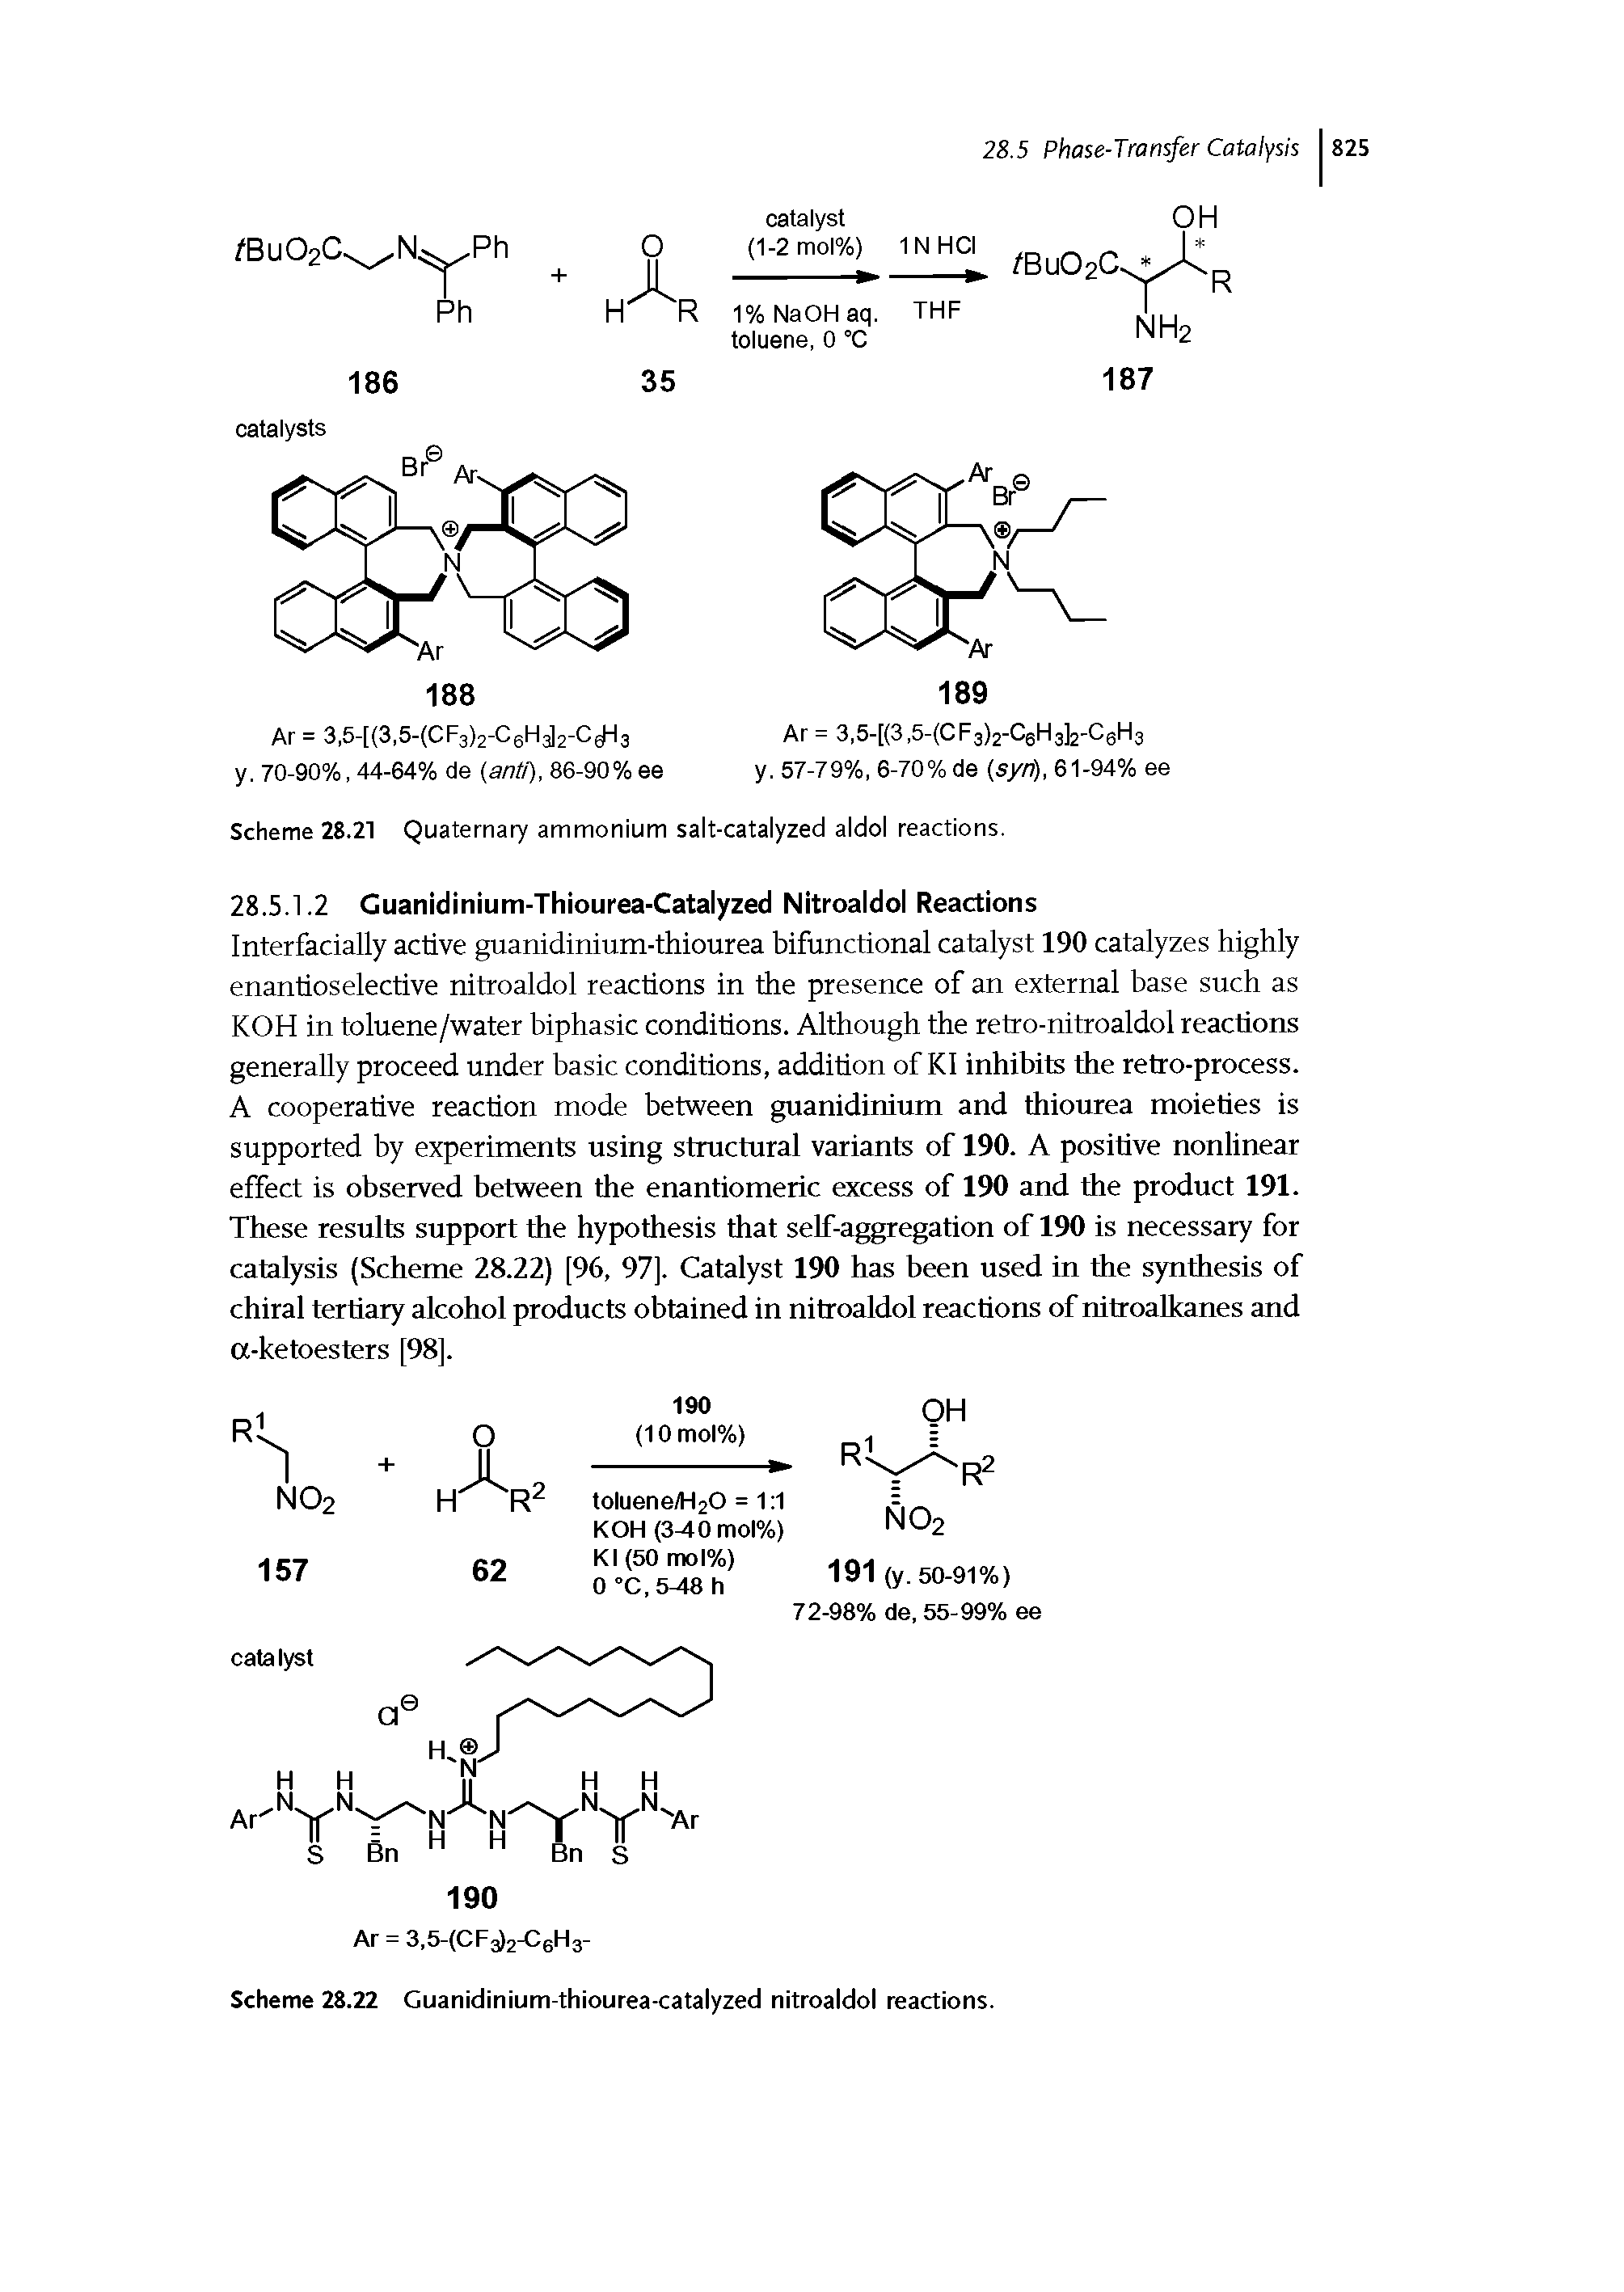 Scheme 28.21 Quaternary ammonium salt-catalyzed aldol reactions.